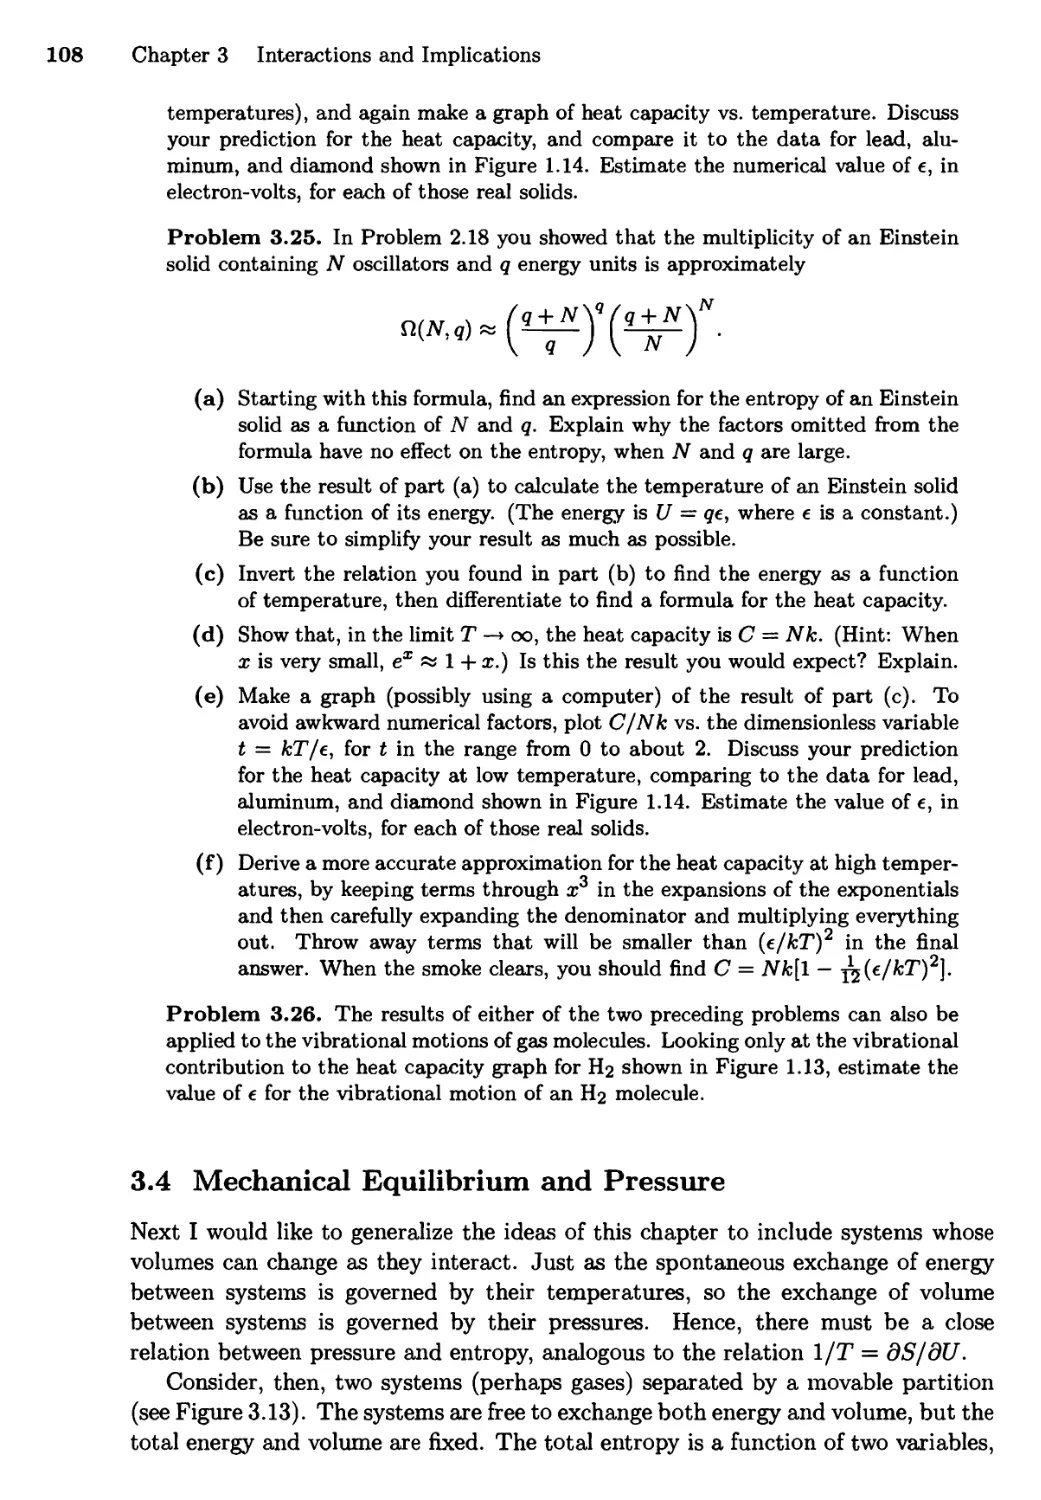 3.4 Mechanical Equilibrium and Pressure